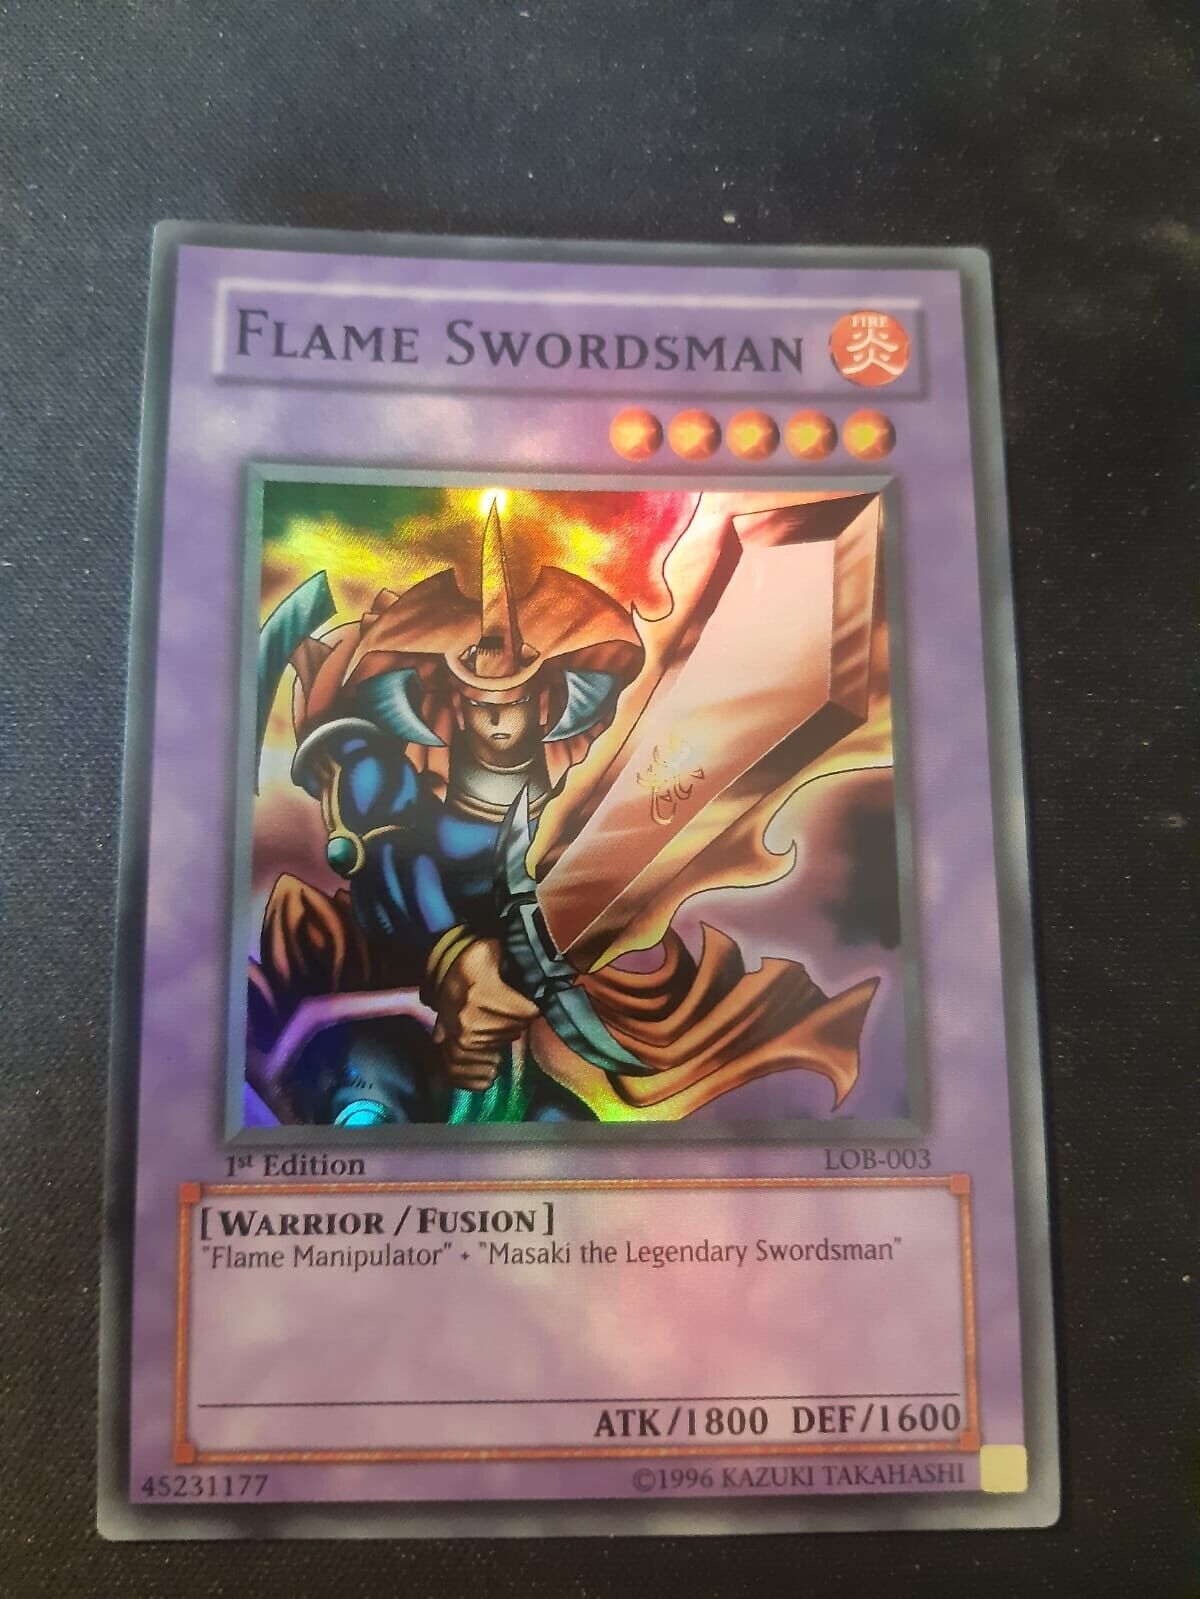 Flame Swordsman LOB-003 1st Edition 1996 Yugioh Trading Card - PSA 10 potential